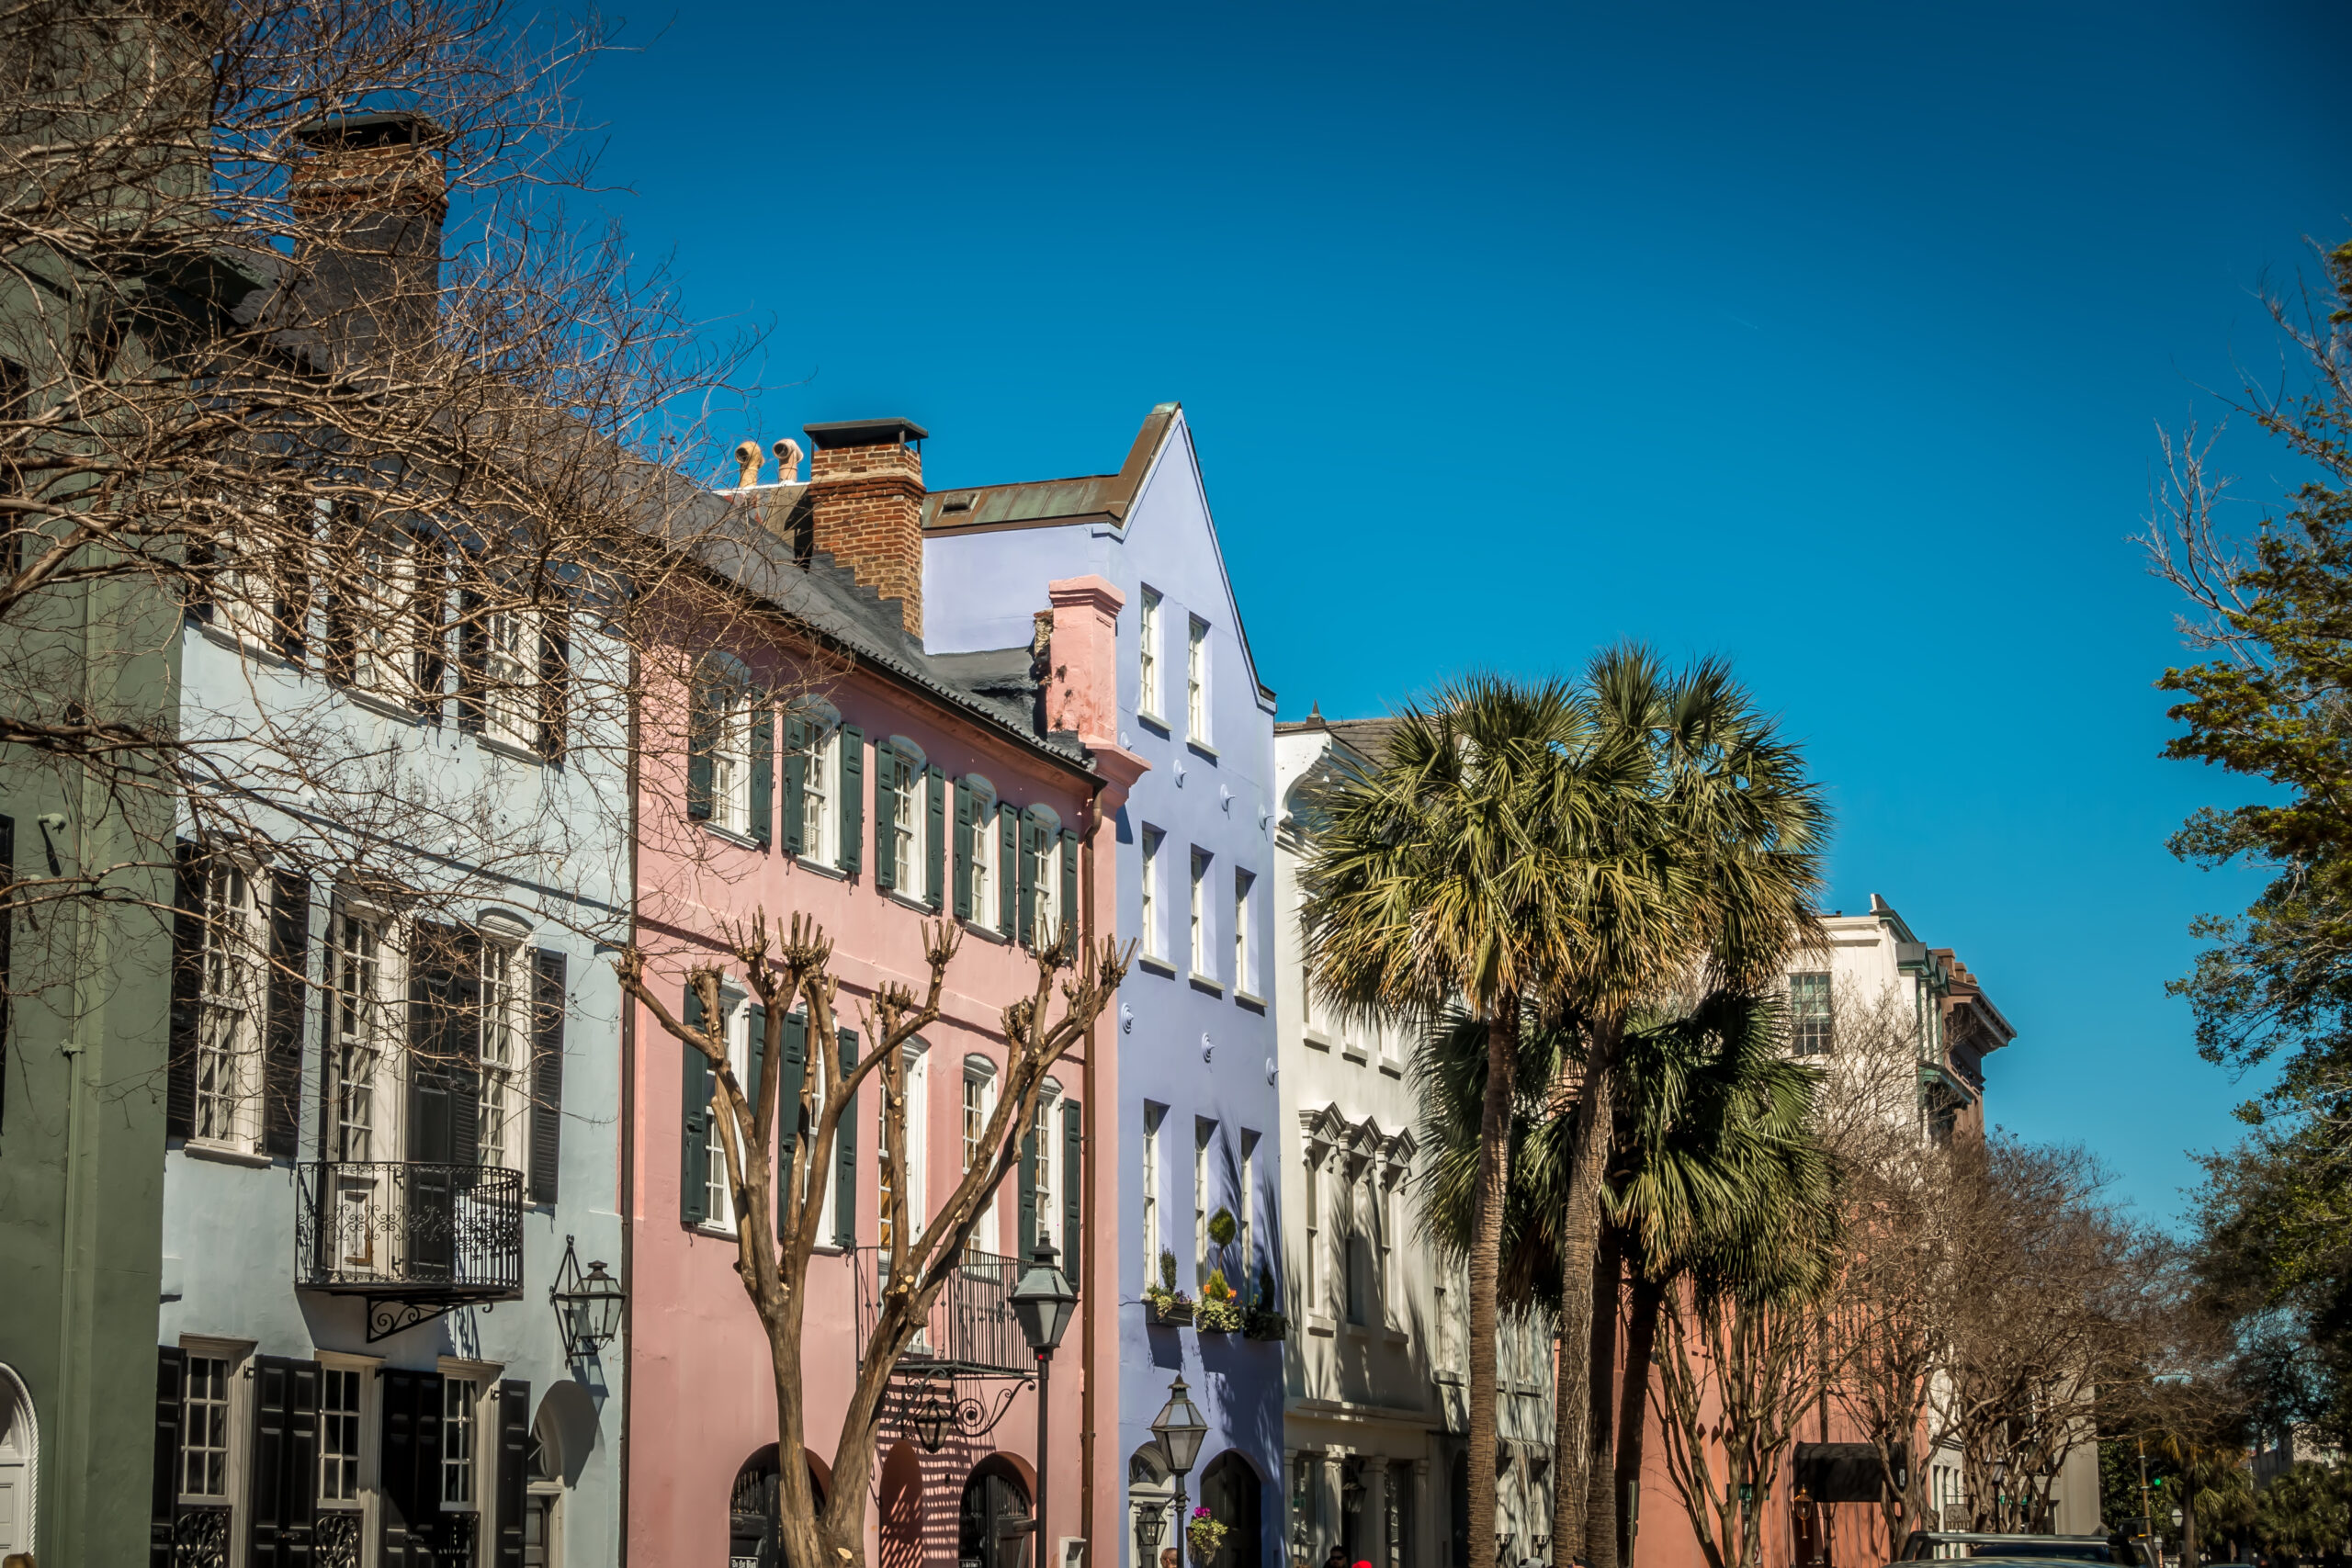 6. Charleston, South Carolina